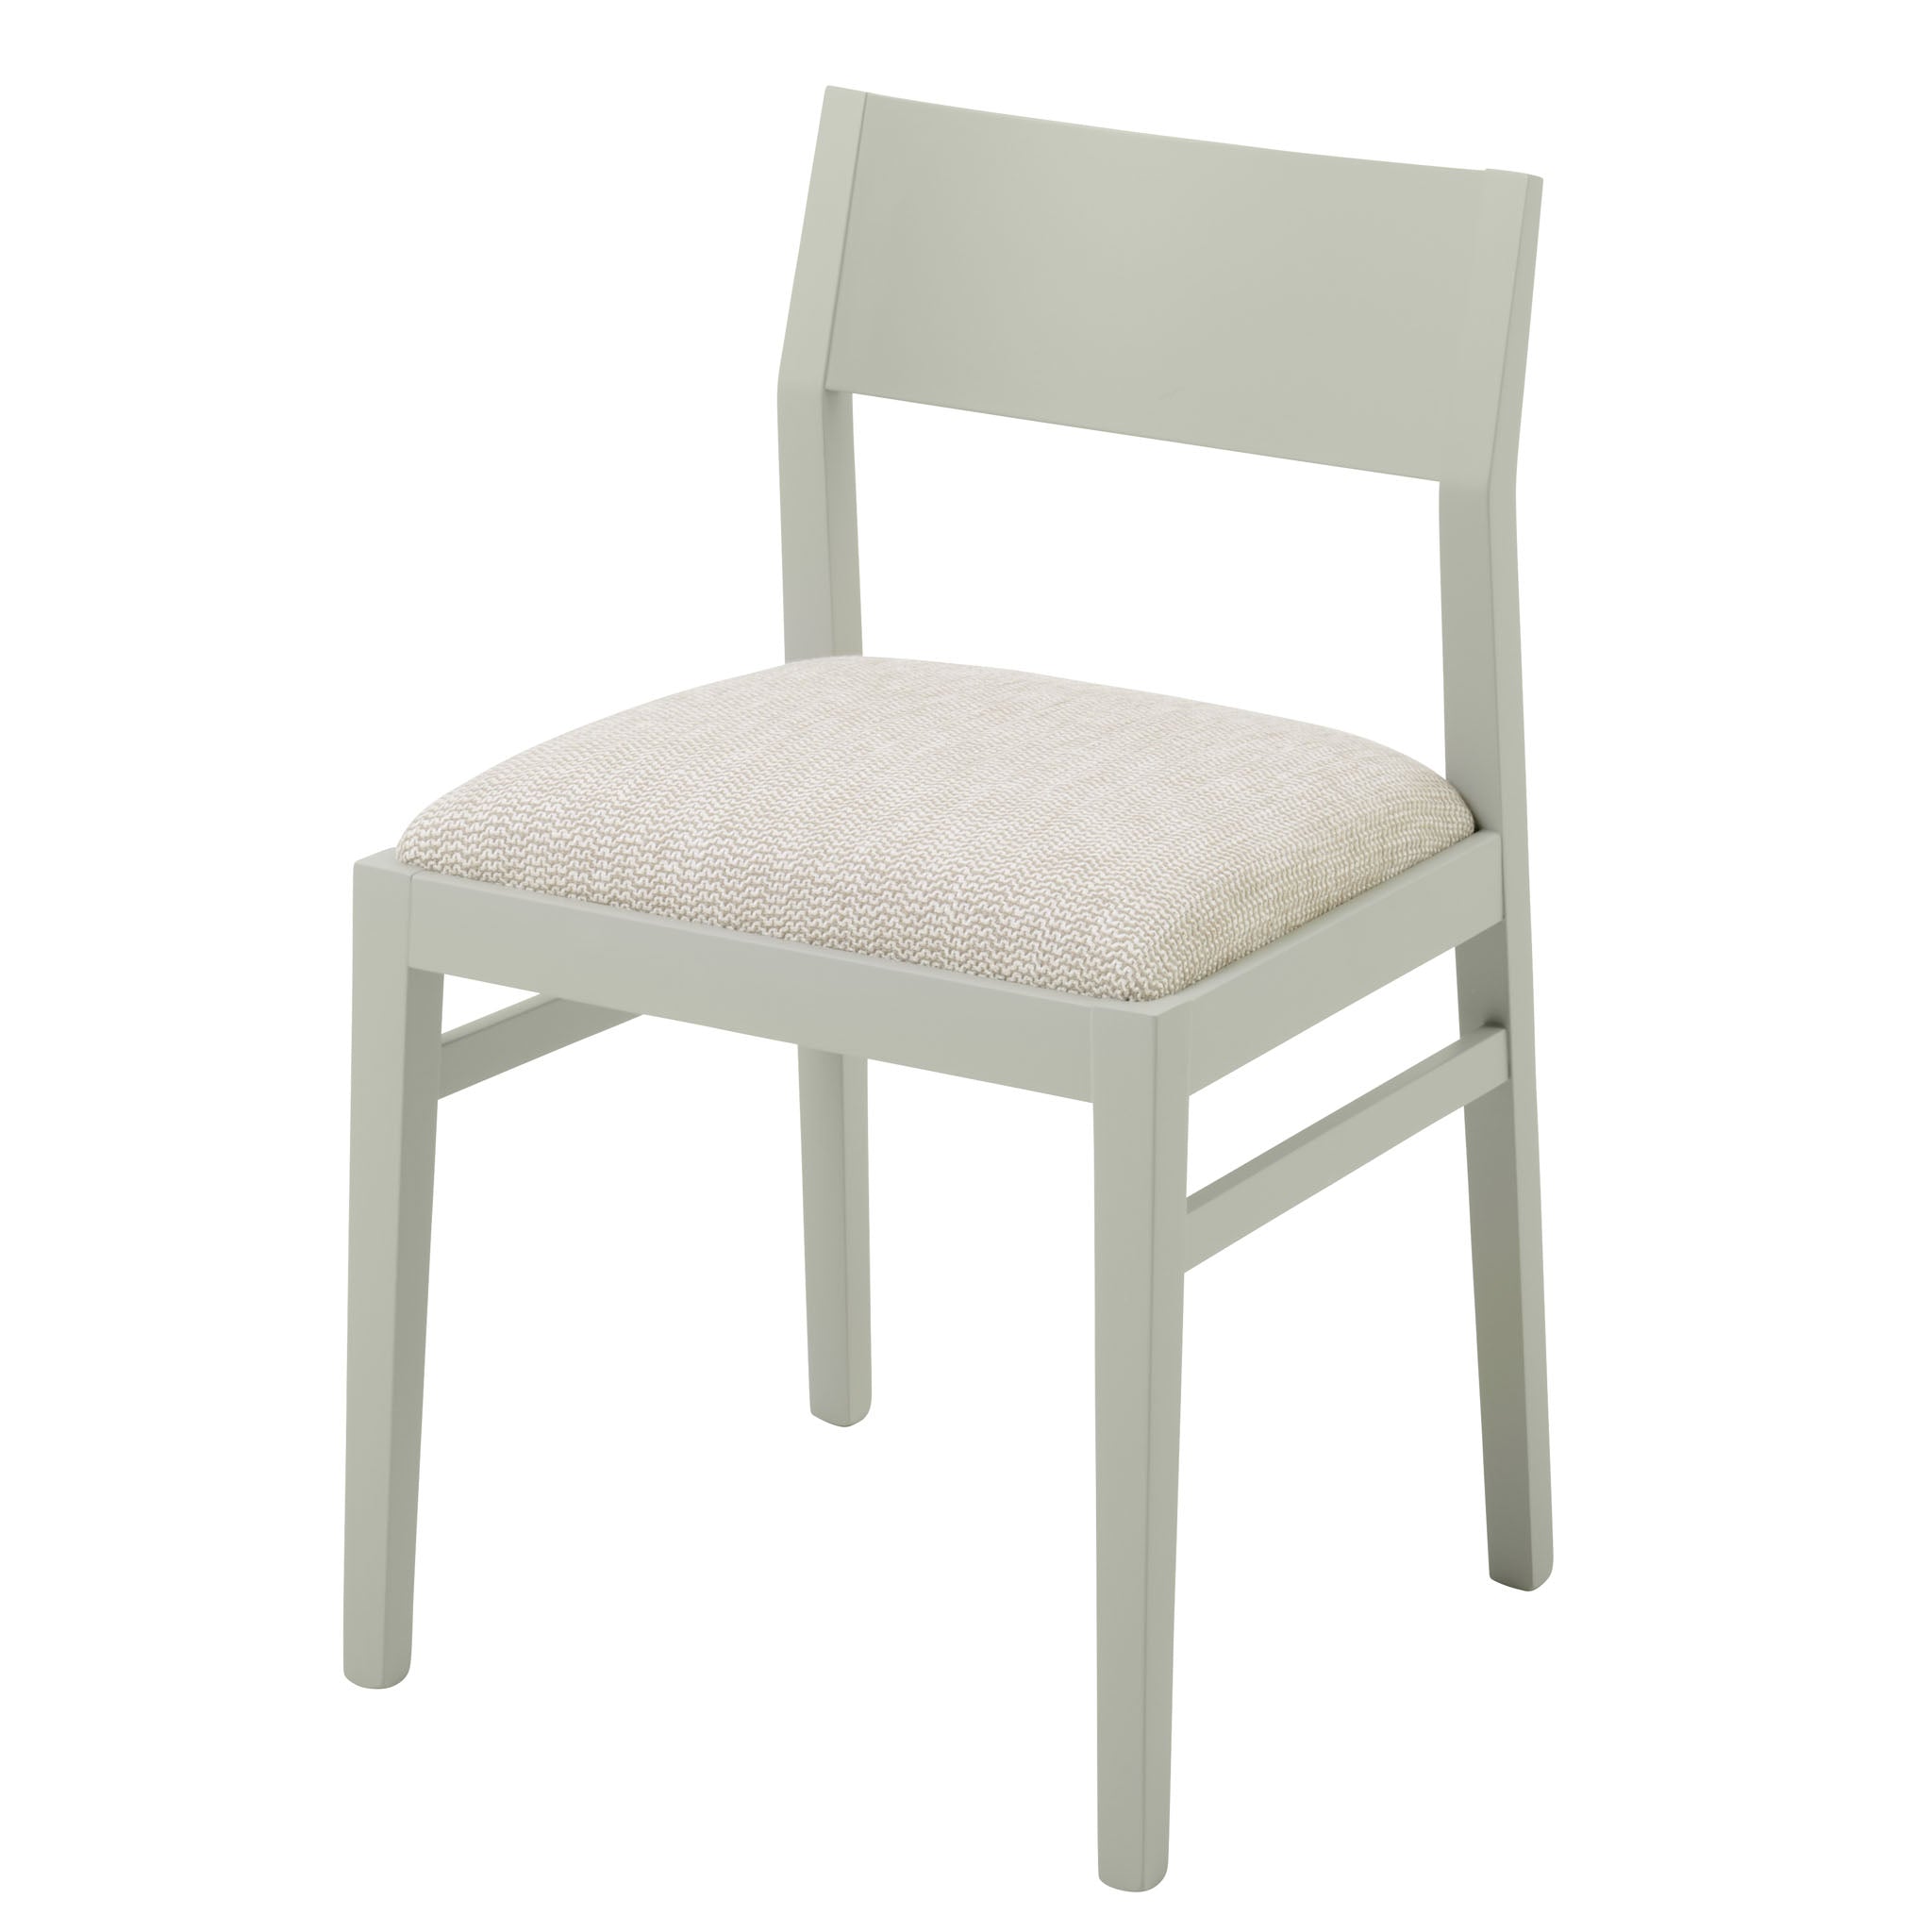 James Chair upholstered in the textured weave Kora Basket from Villa Nova